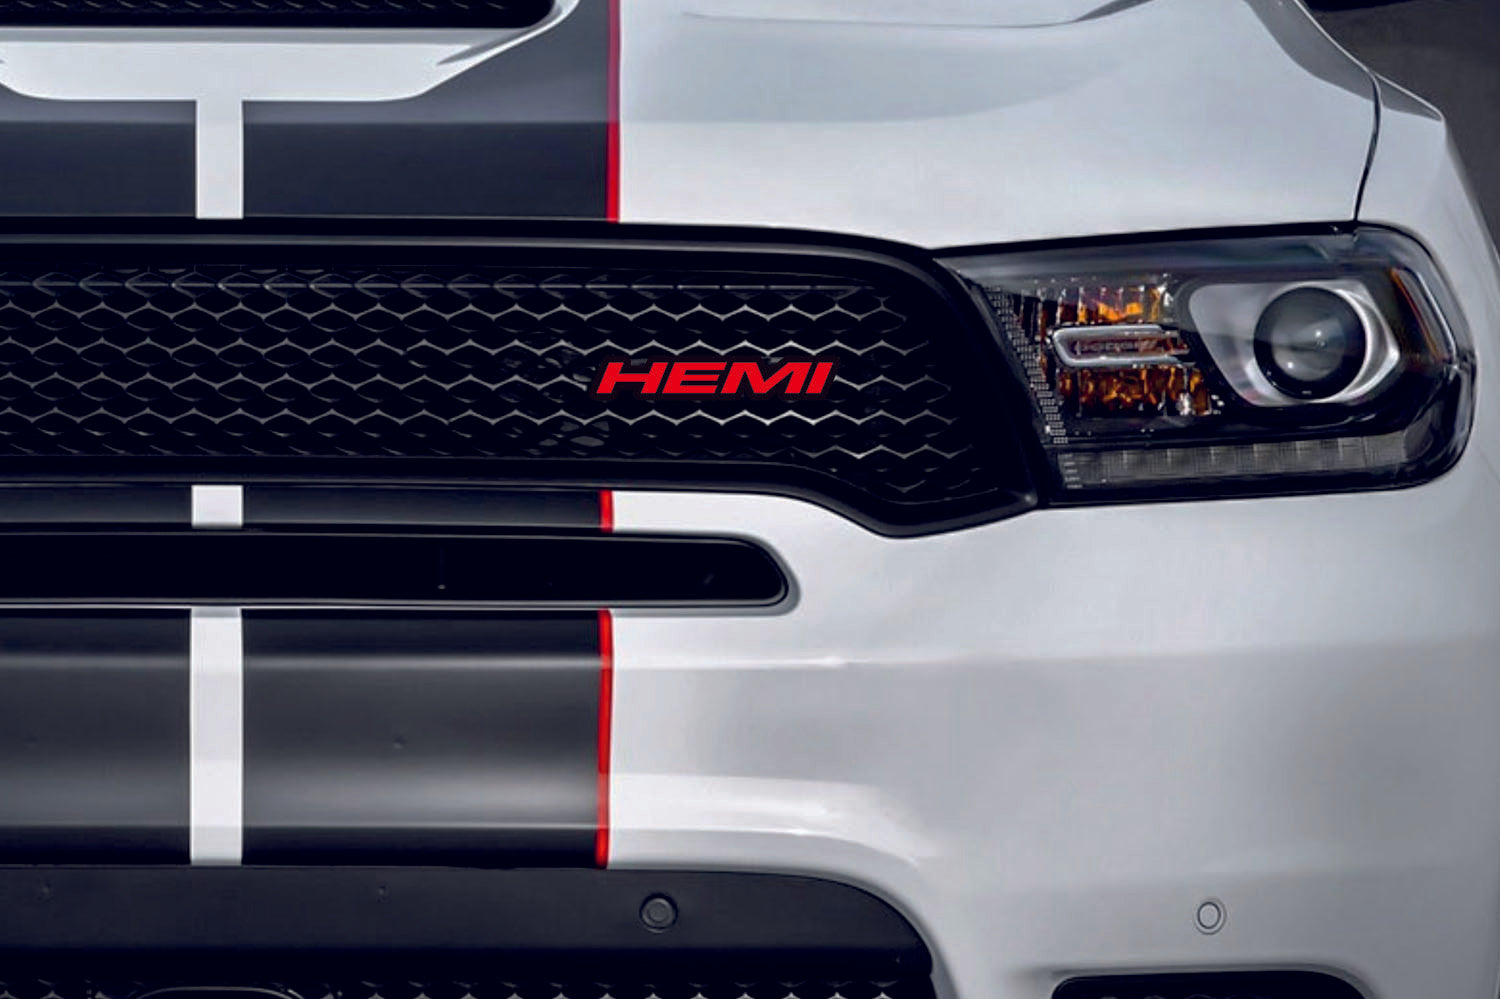 JEEP Radiator grille emblem with HEMI logo (type 2) - decoinfabric